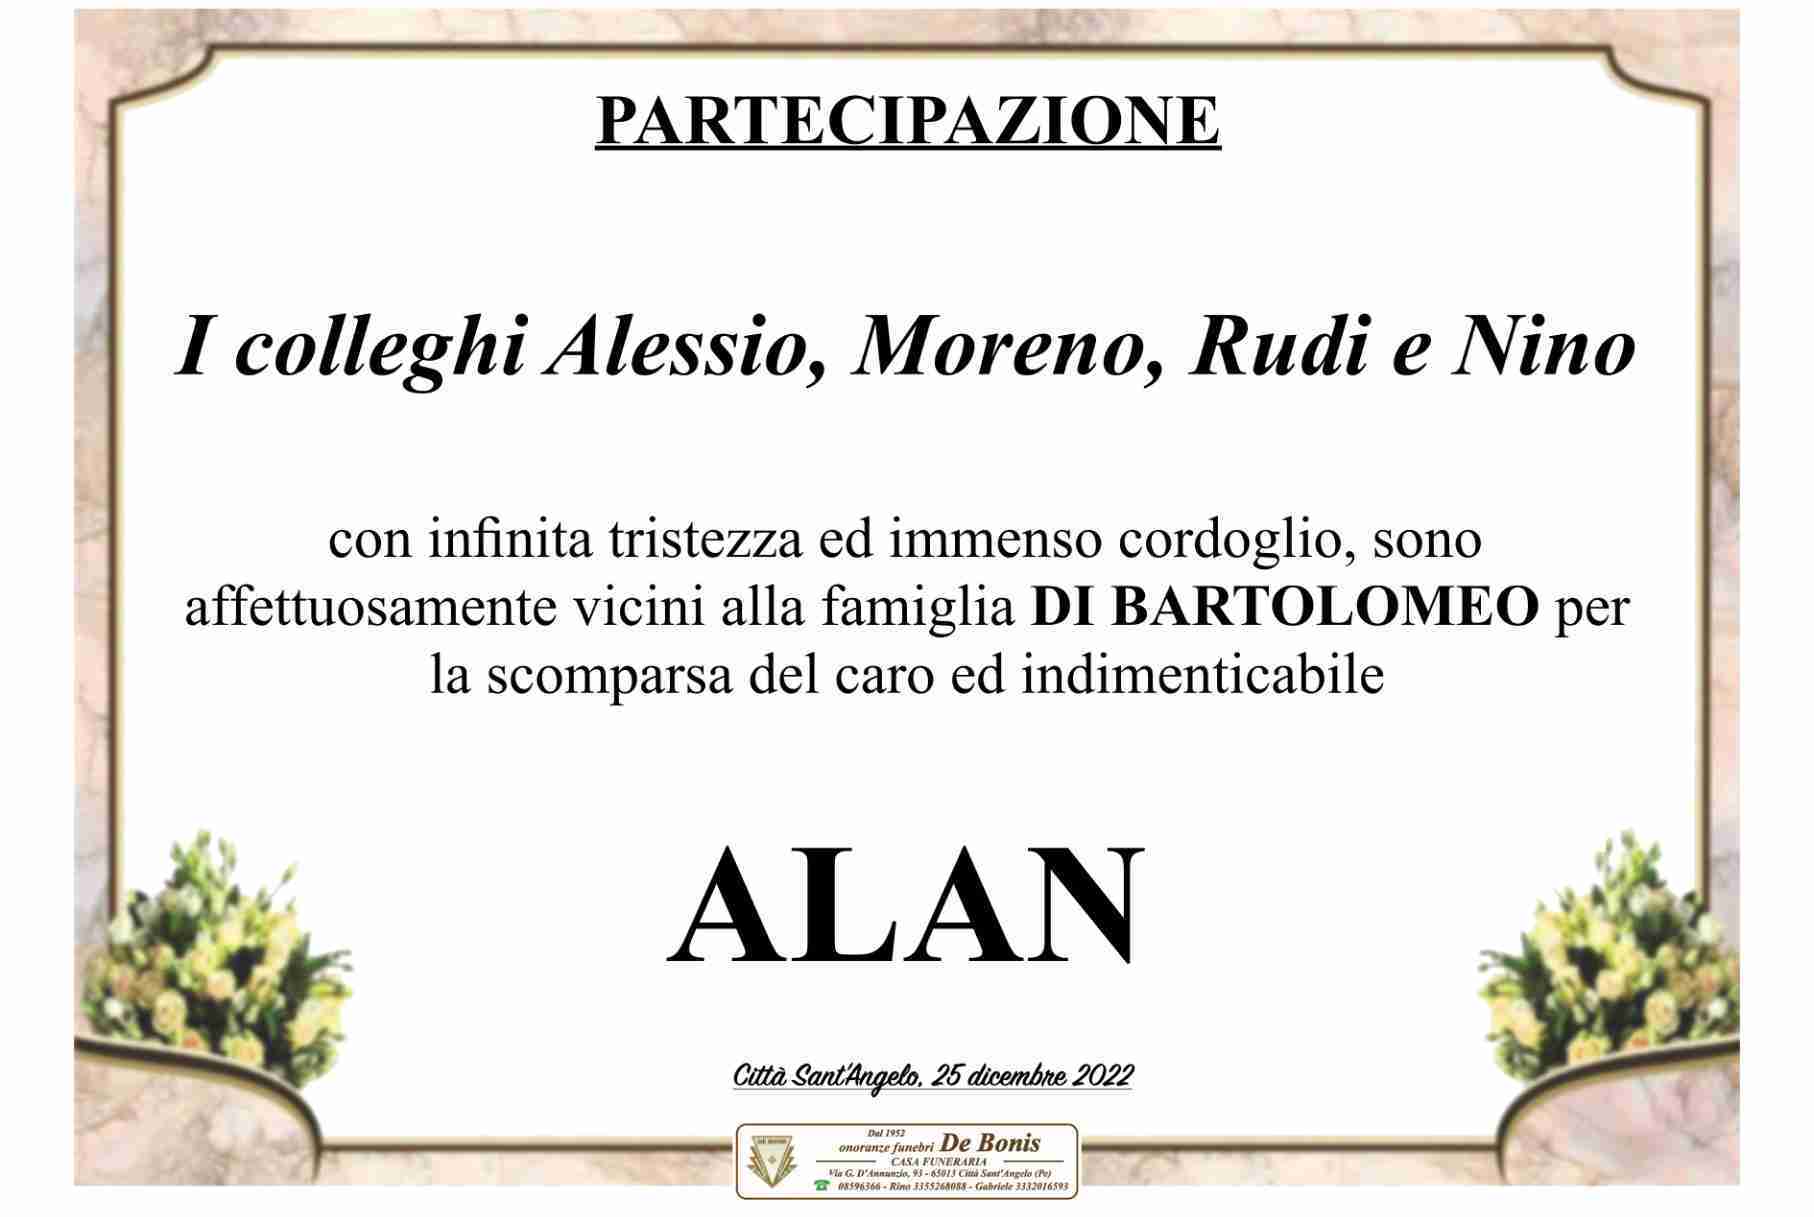 Alan Di Bartolomeo